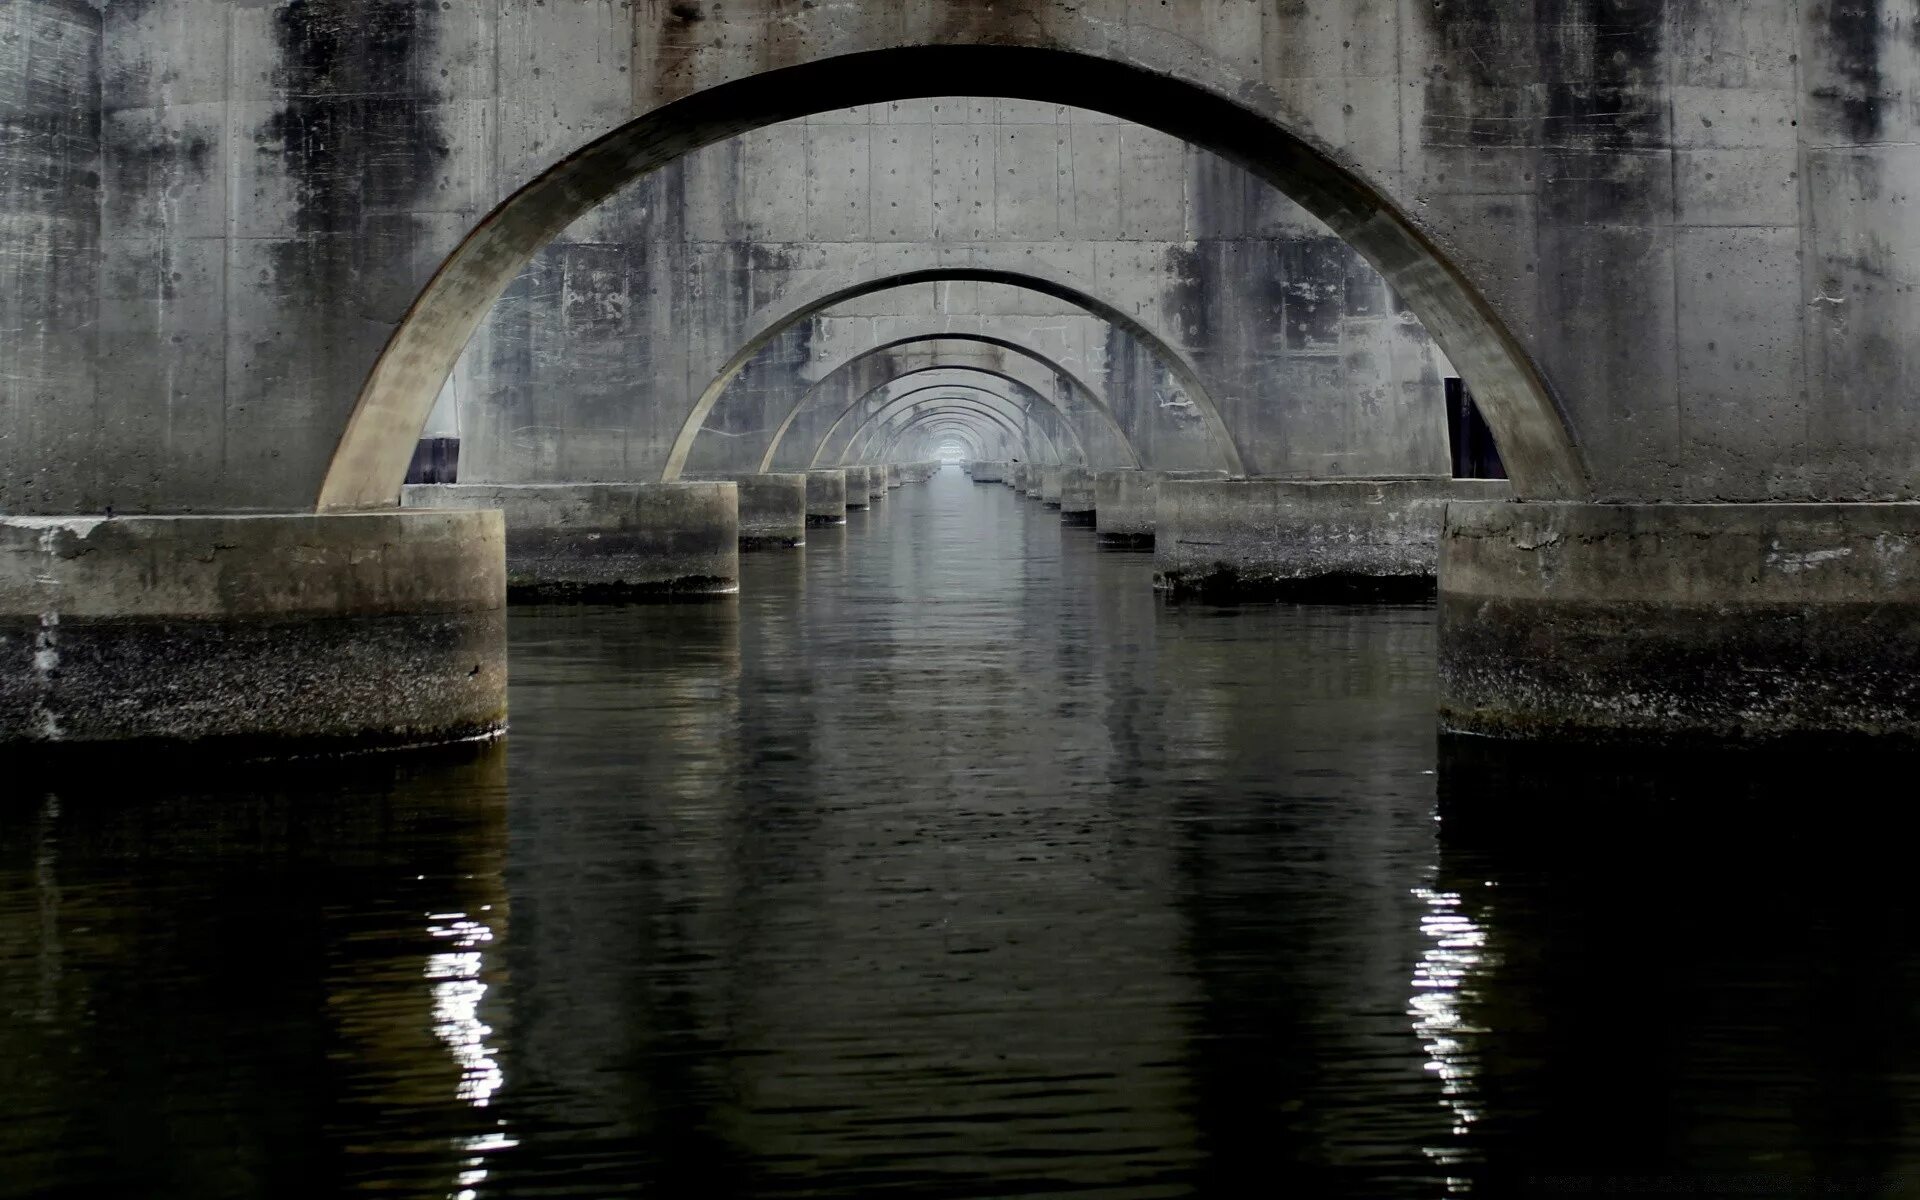 Арка в воде. Отражение моста в воде. Мост под водой. Арка под мостом. Отражение в воде.